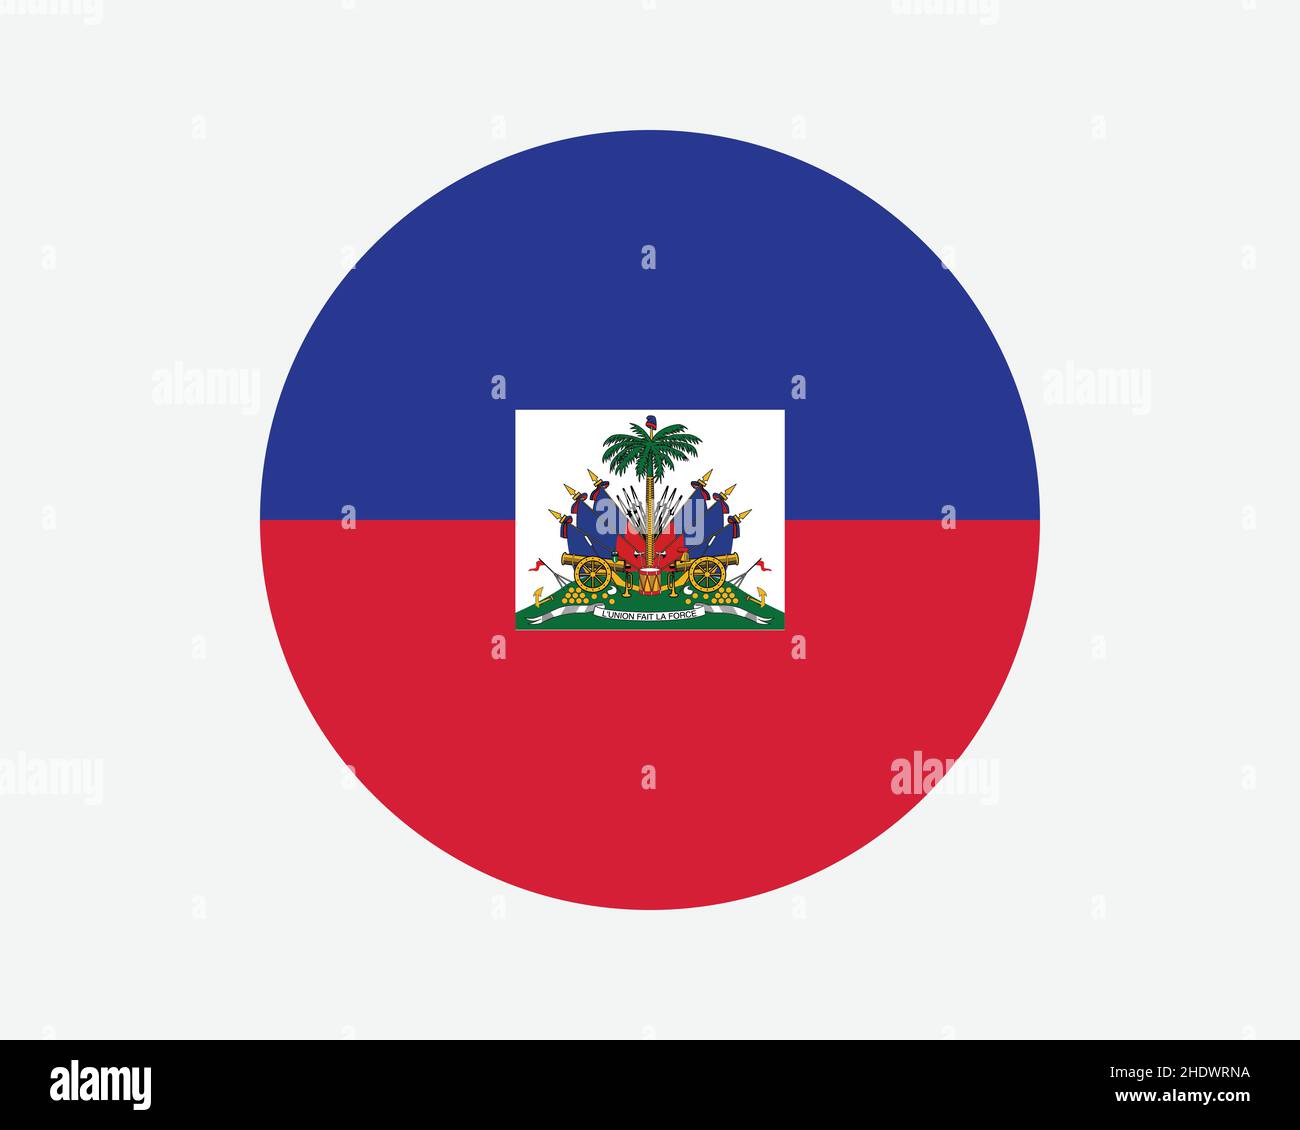 Haiti Round Country Flag. Haitian Circle National Flag. Republic of Haiti Circular Shape Button Banner. EPS Vector Illustration. Stock Vector